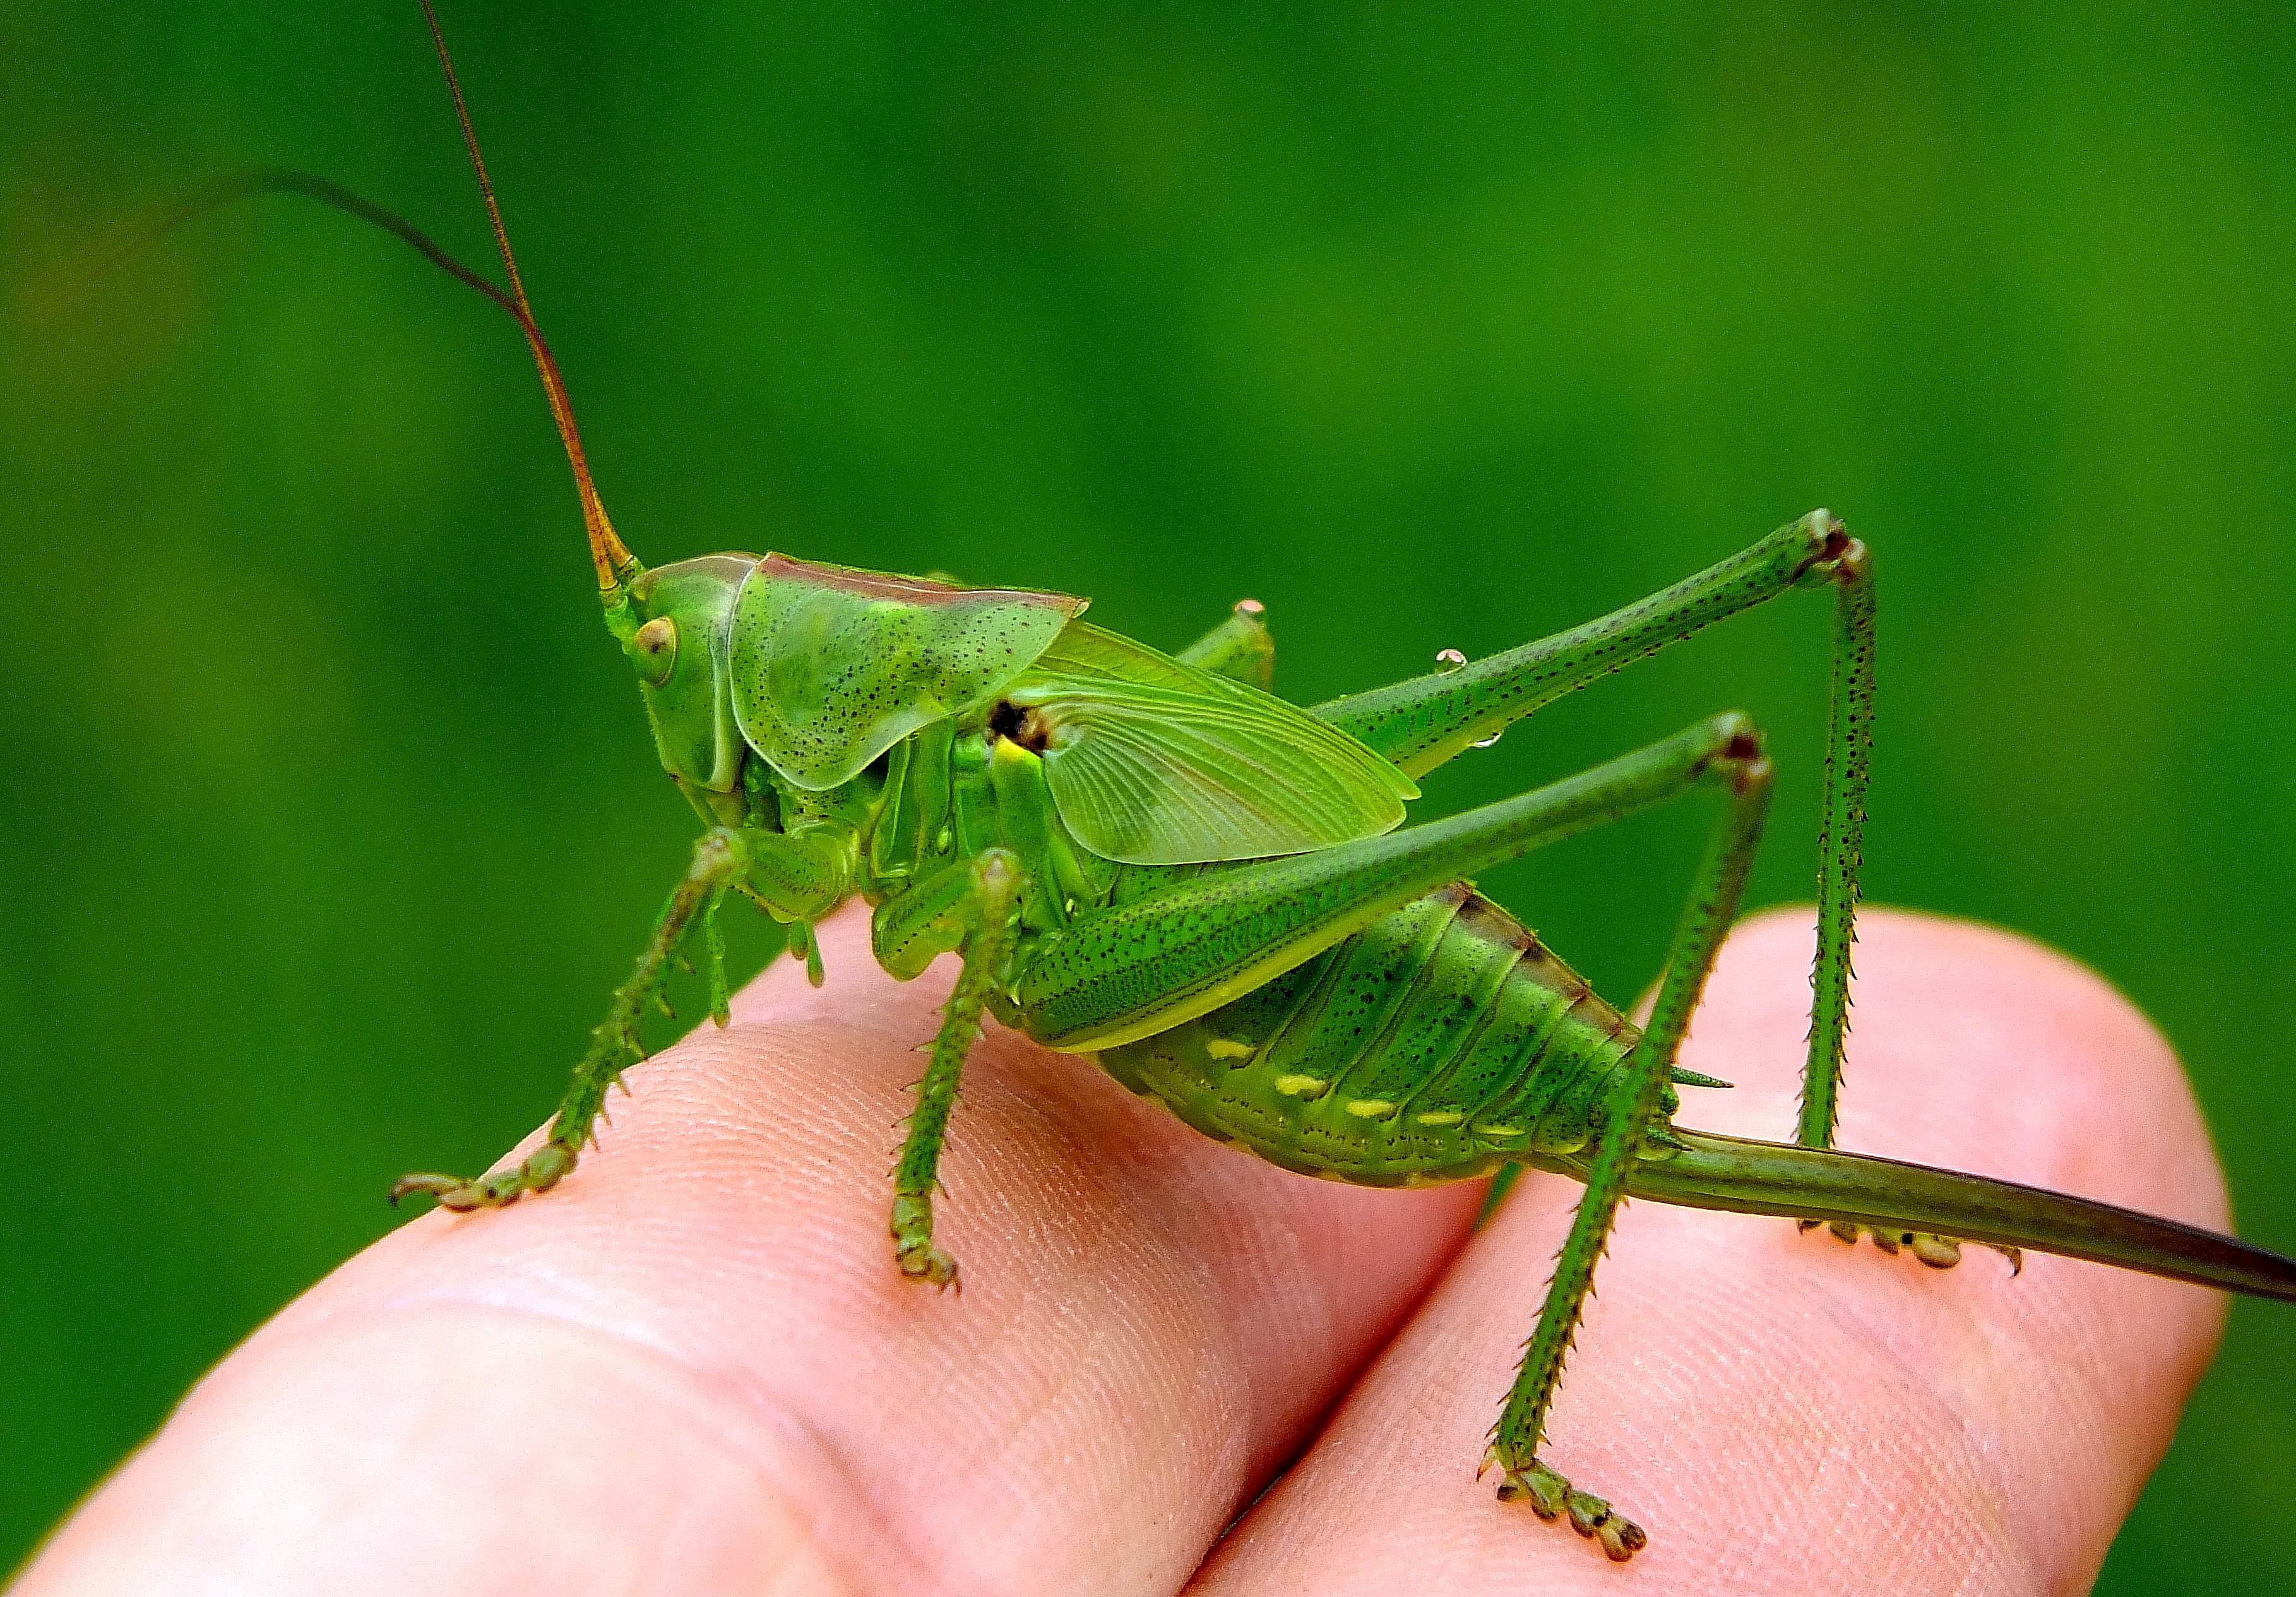 Holding a grasshopper